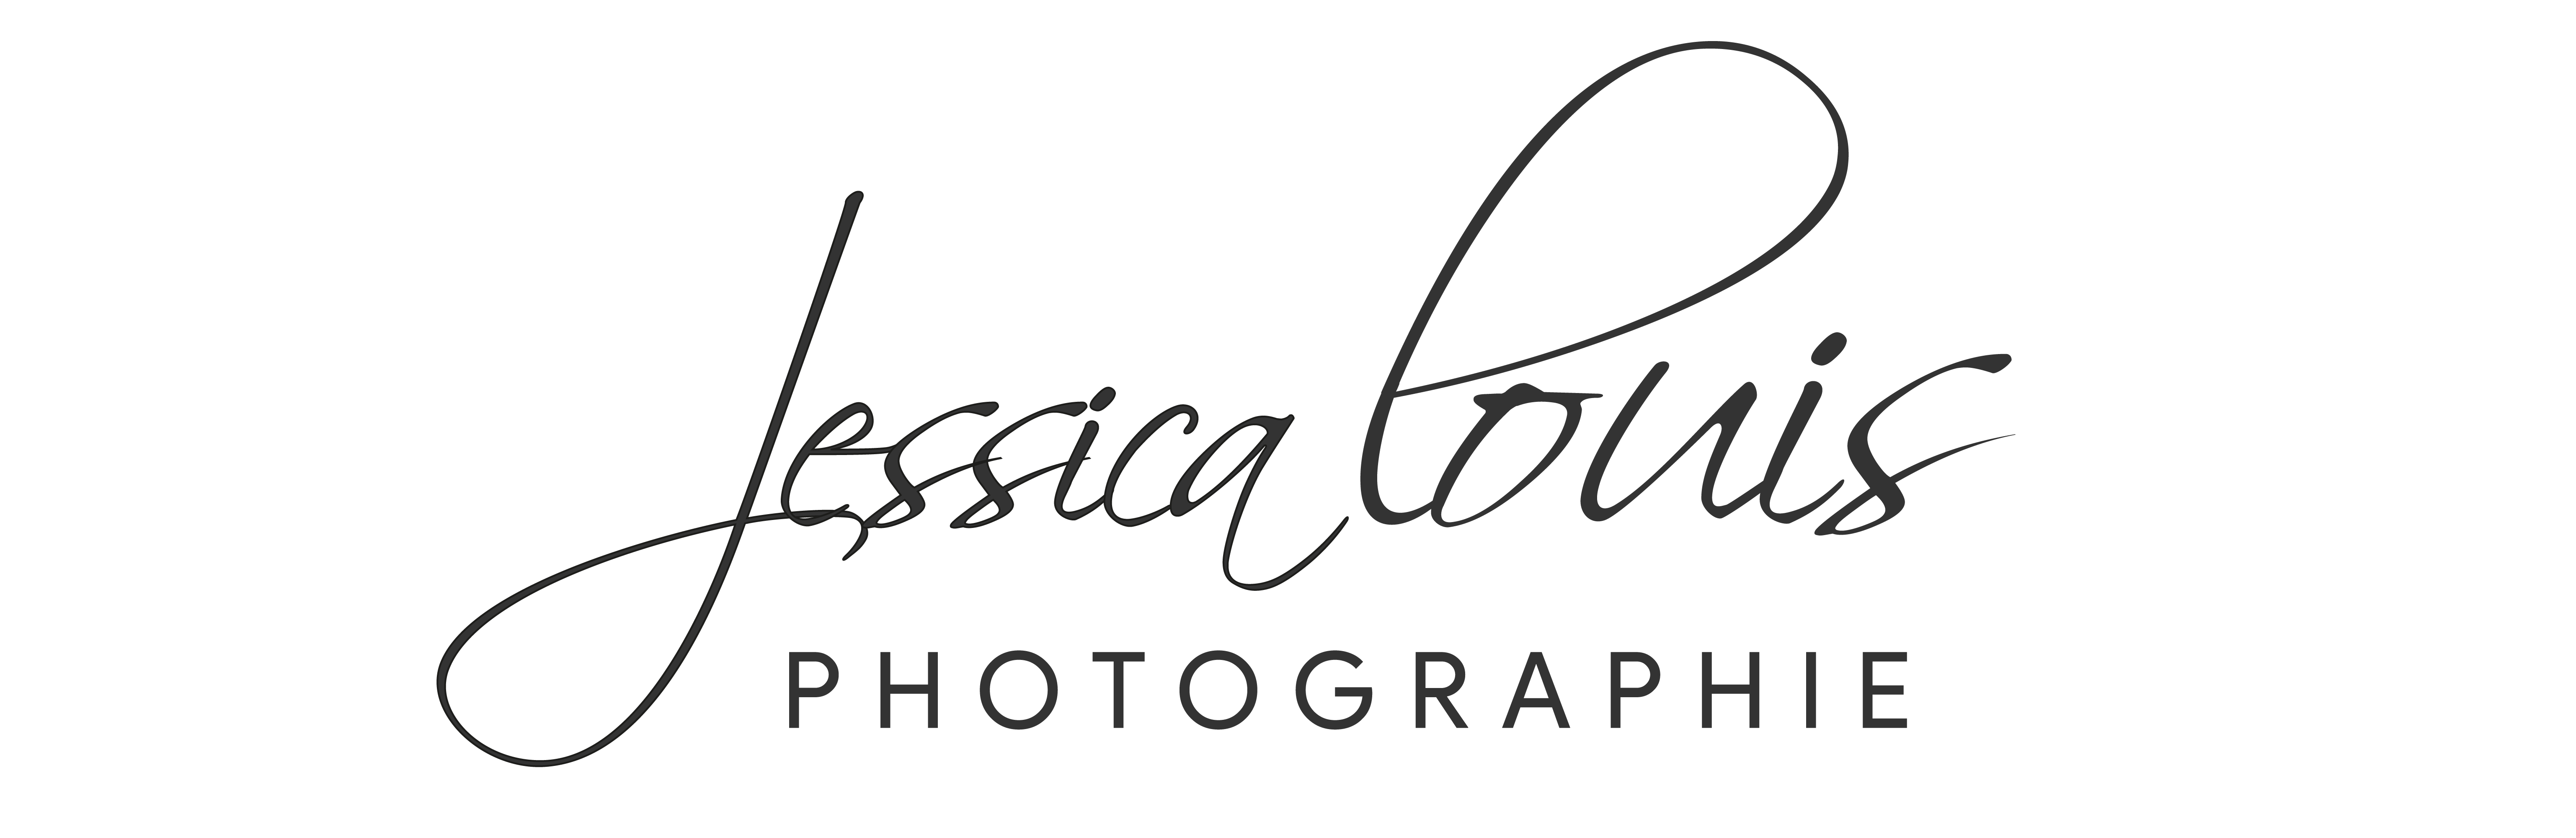 Jessica-Louis_Photographe-Lifestyle-Hyères-Var